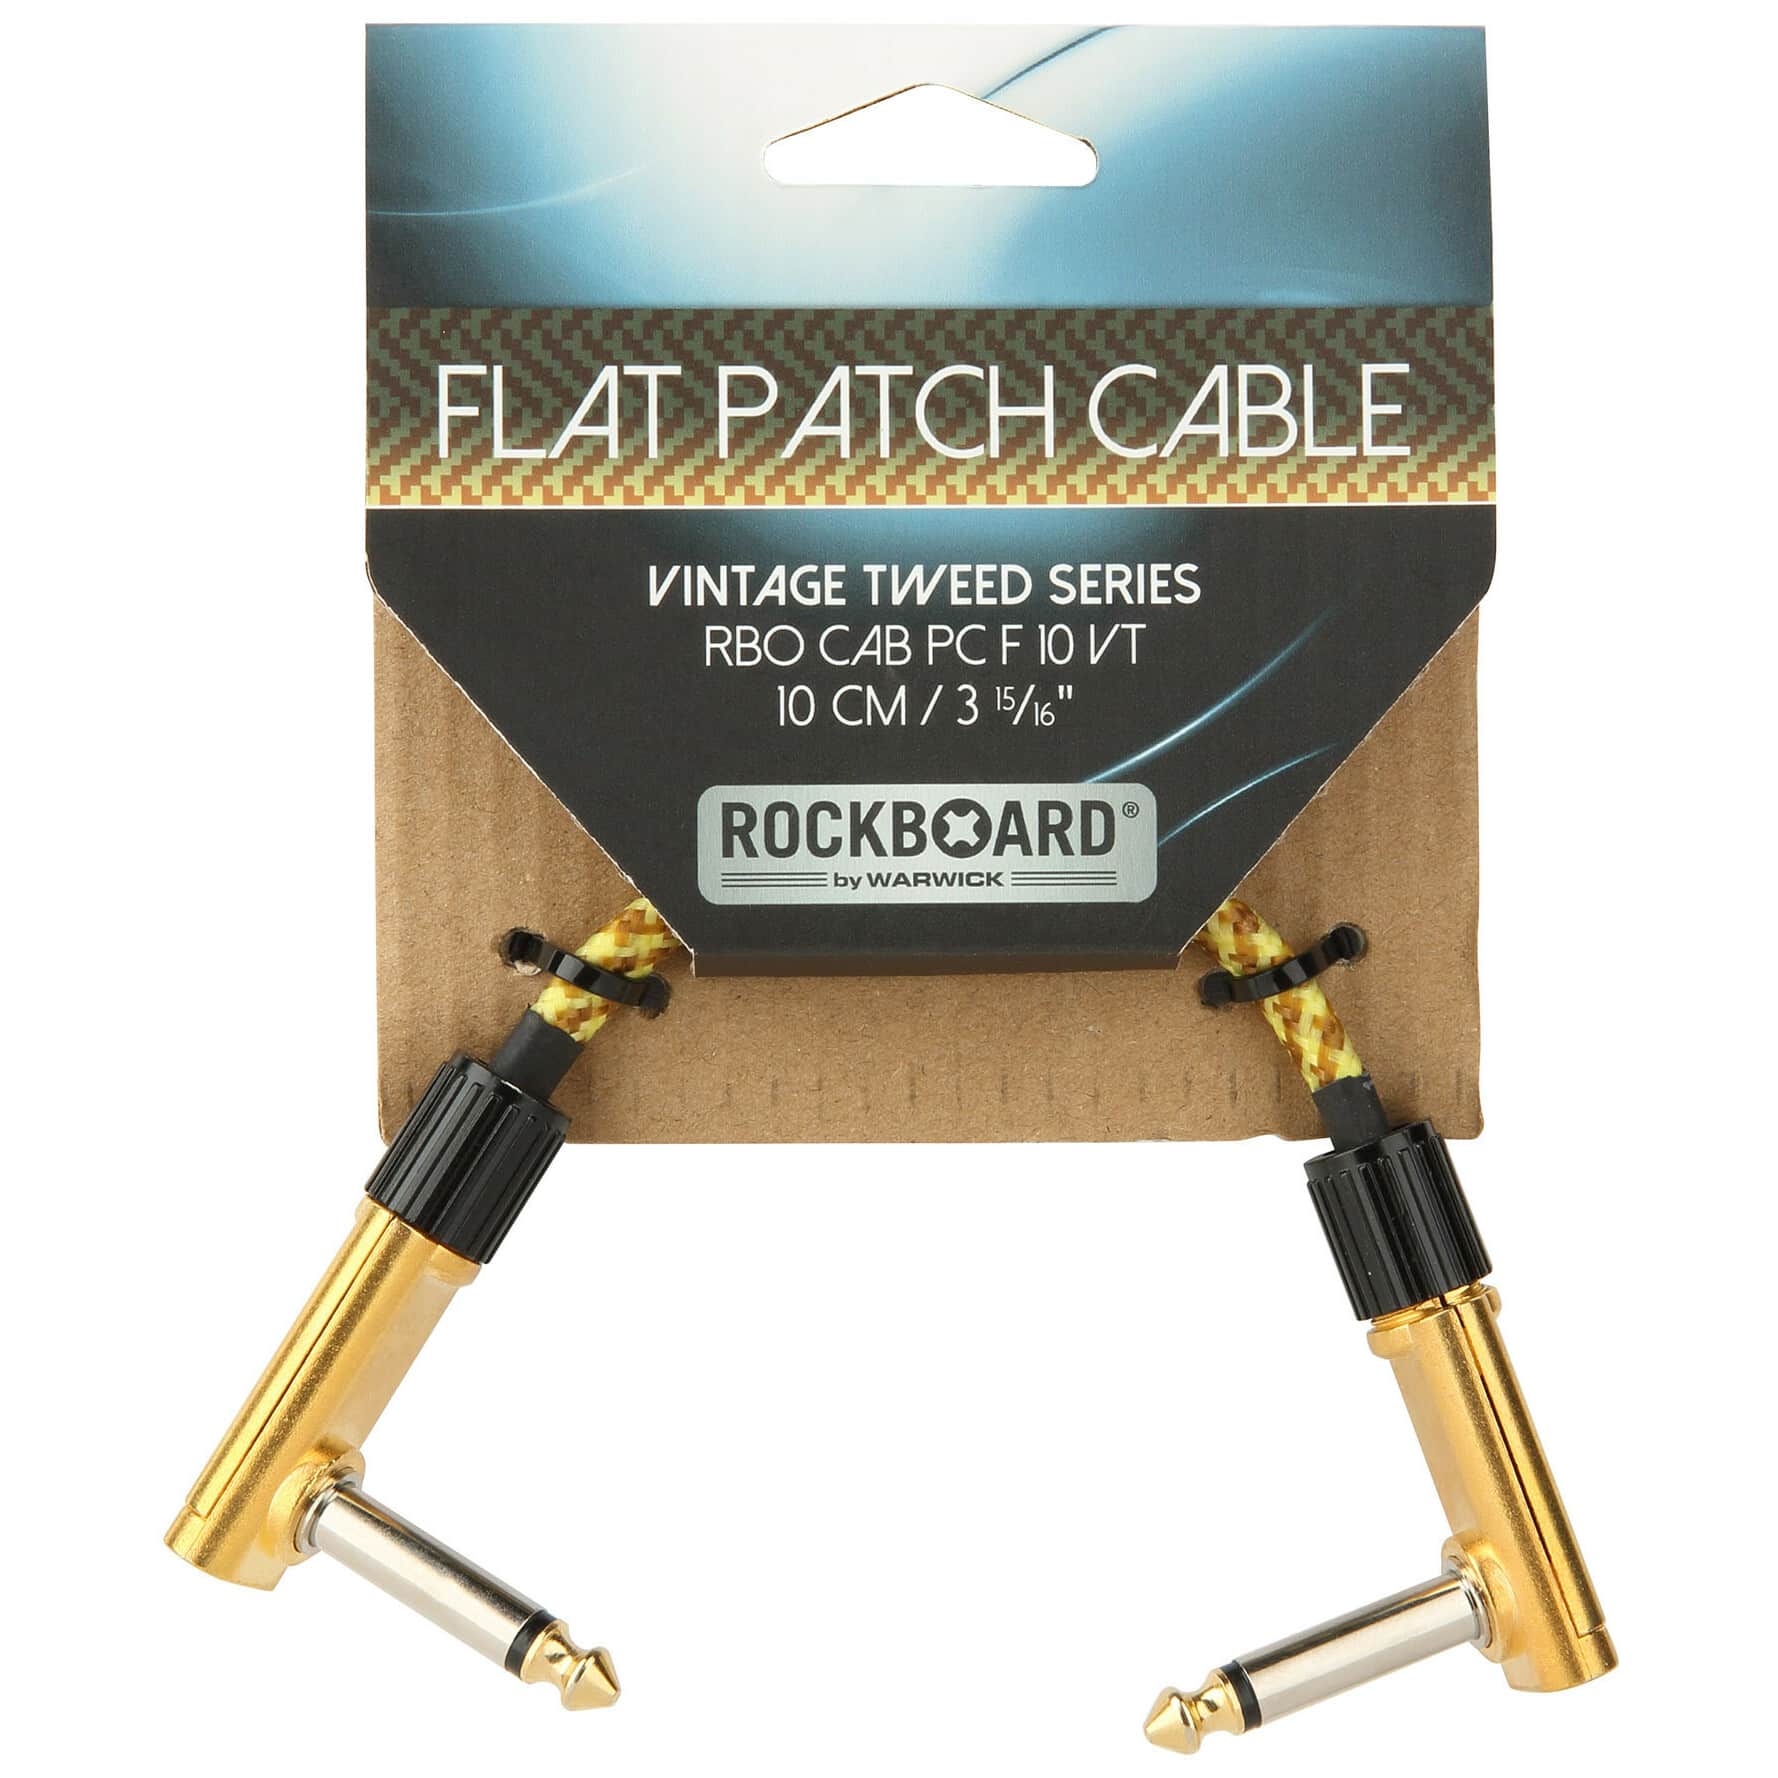 RockBoard Flat Patch Cable Vintage Tweed 10 cm 2